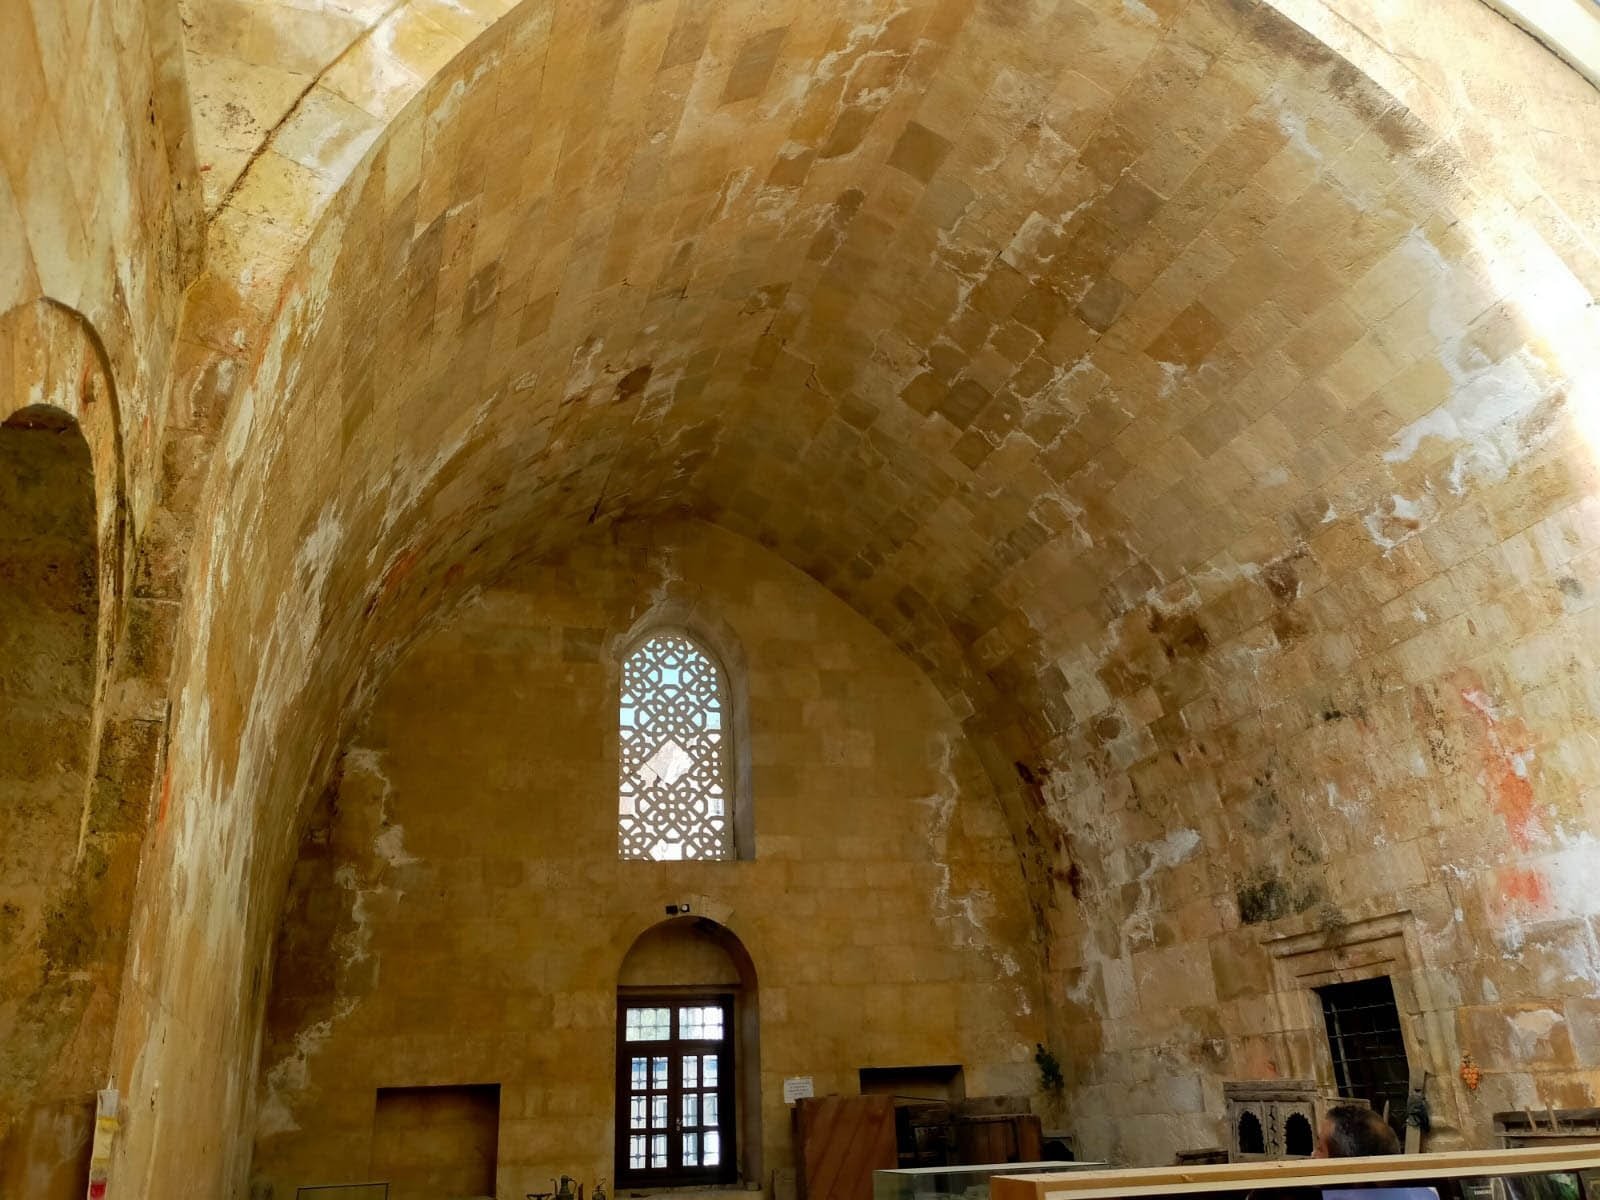 A hall in the Tol Madrassa built in 1339 in Ermenek province, Karaman, Turkey, Nov. 16, 2021. (DHA Photo)